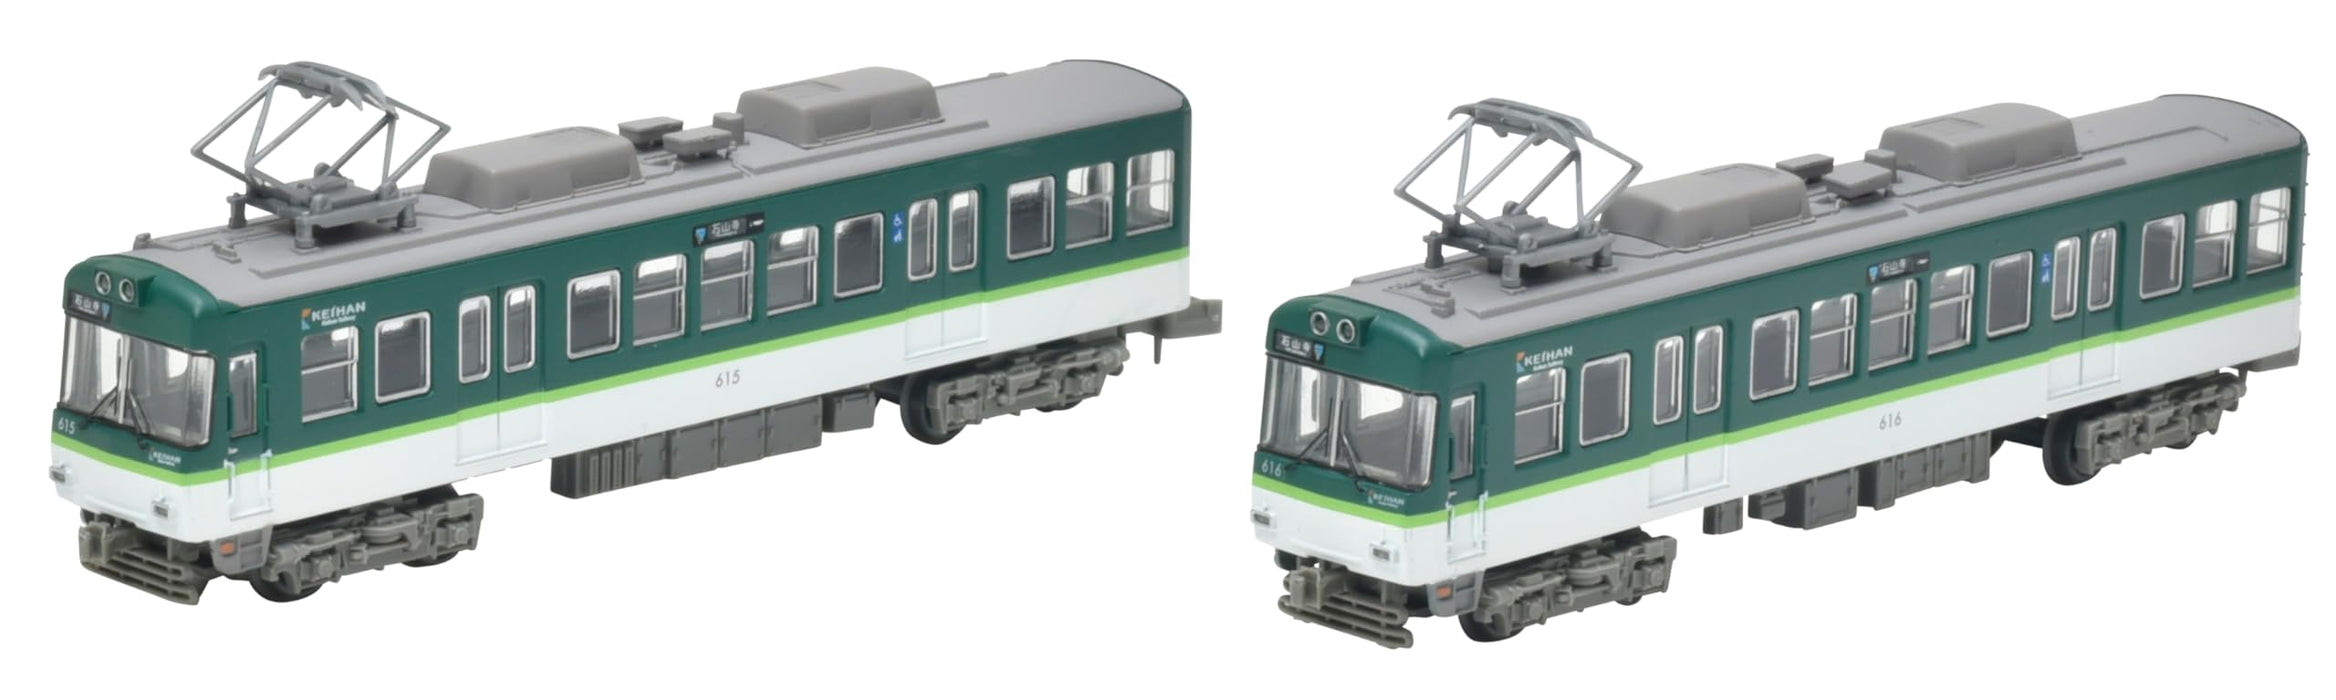 Tomytec Keihan Electric Railway Otsu Line Type 600 3e édition Diorama 2 voitures